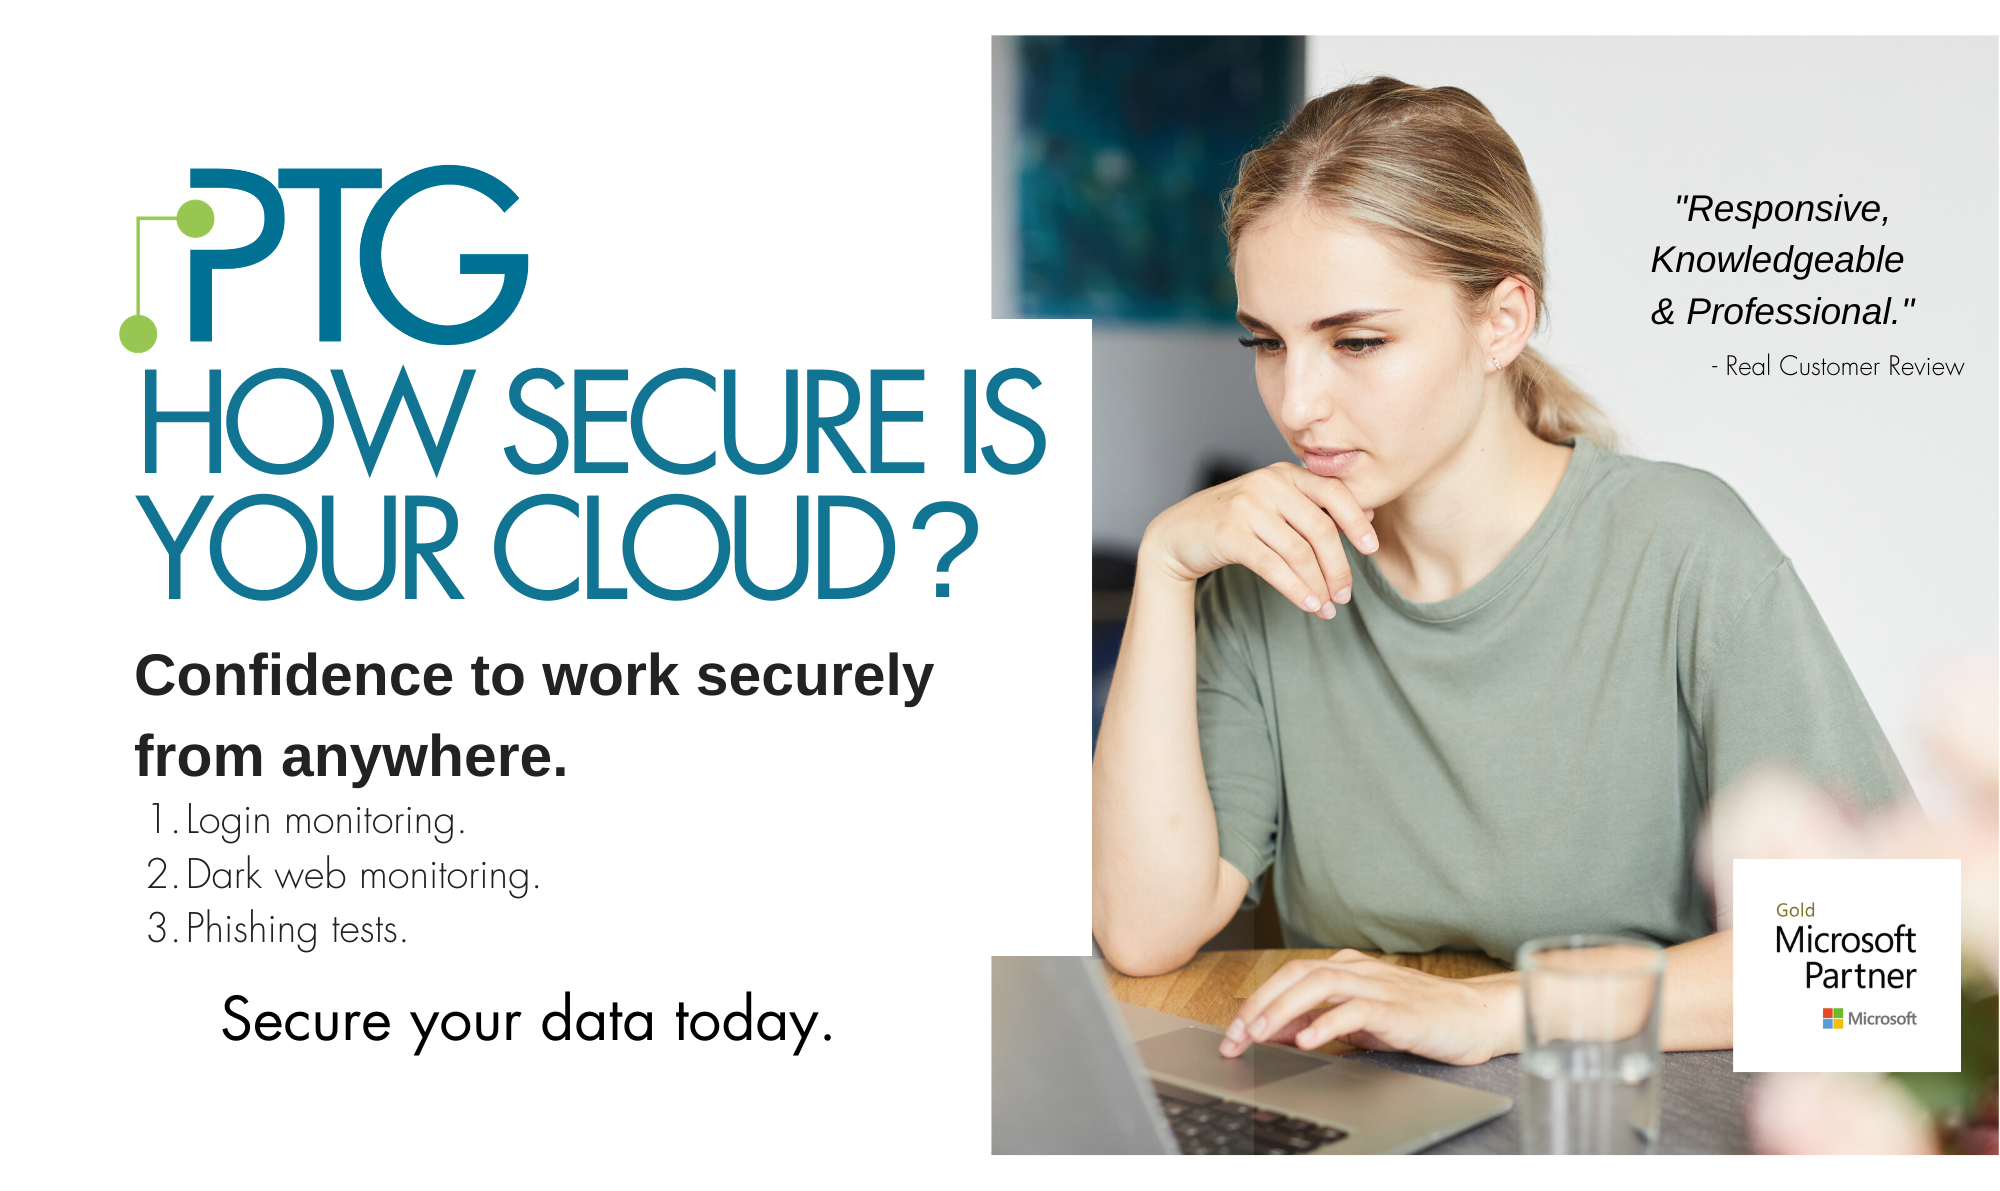 cloud security print ad (3)